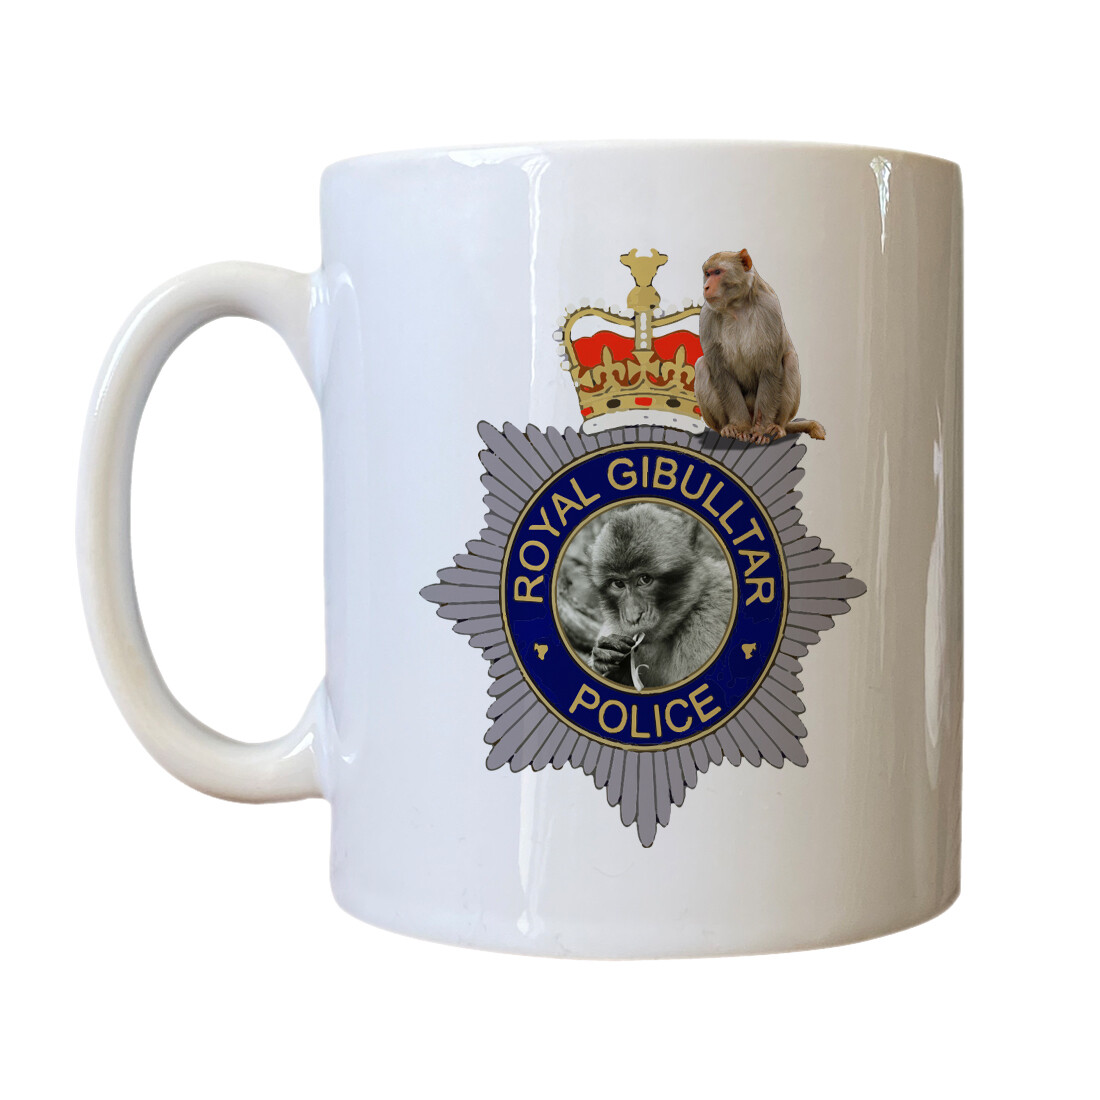 Personalised 'Royal Gibulltar Police' Drinking Vessel